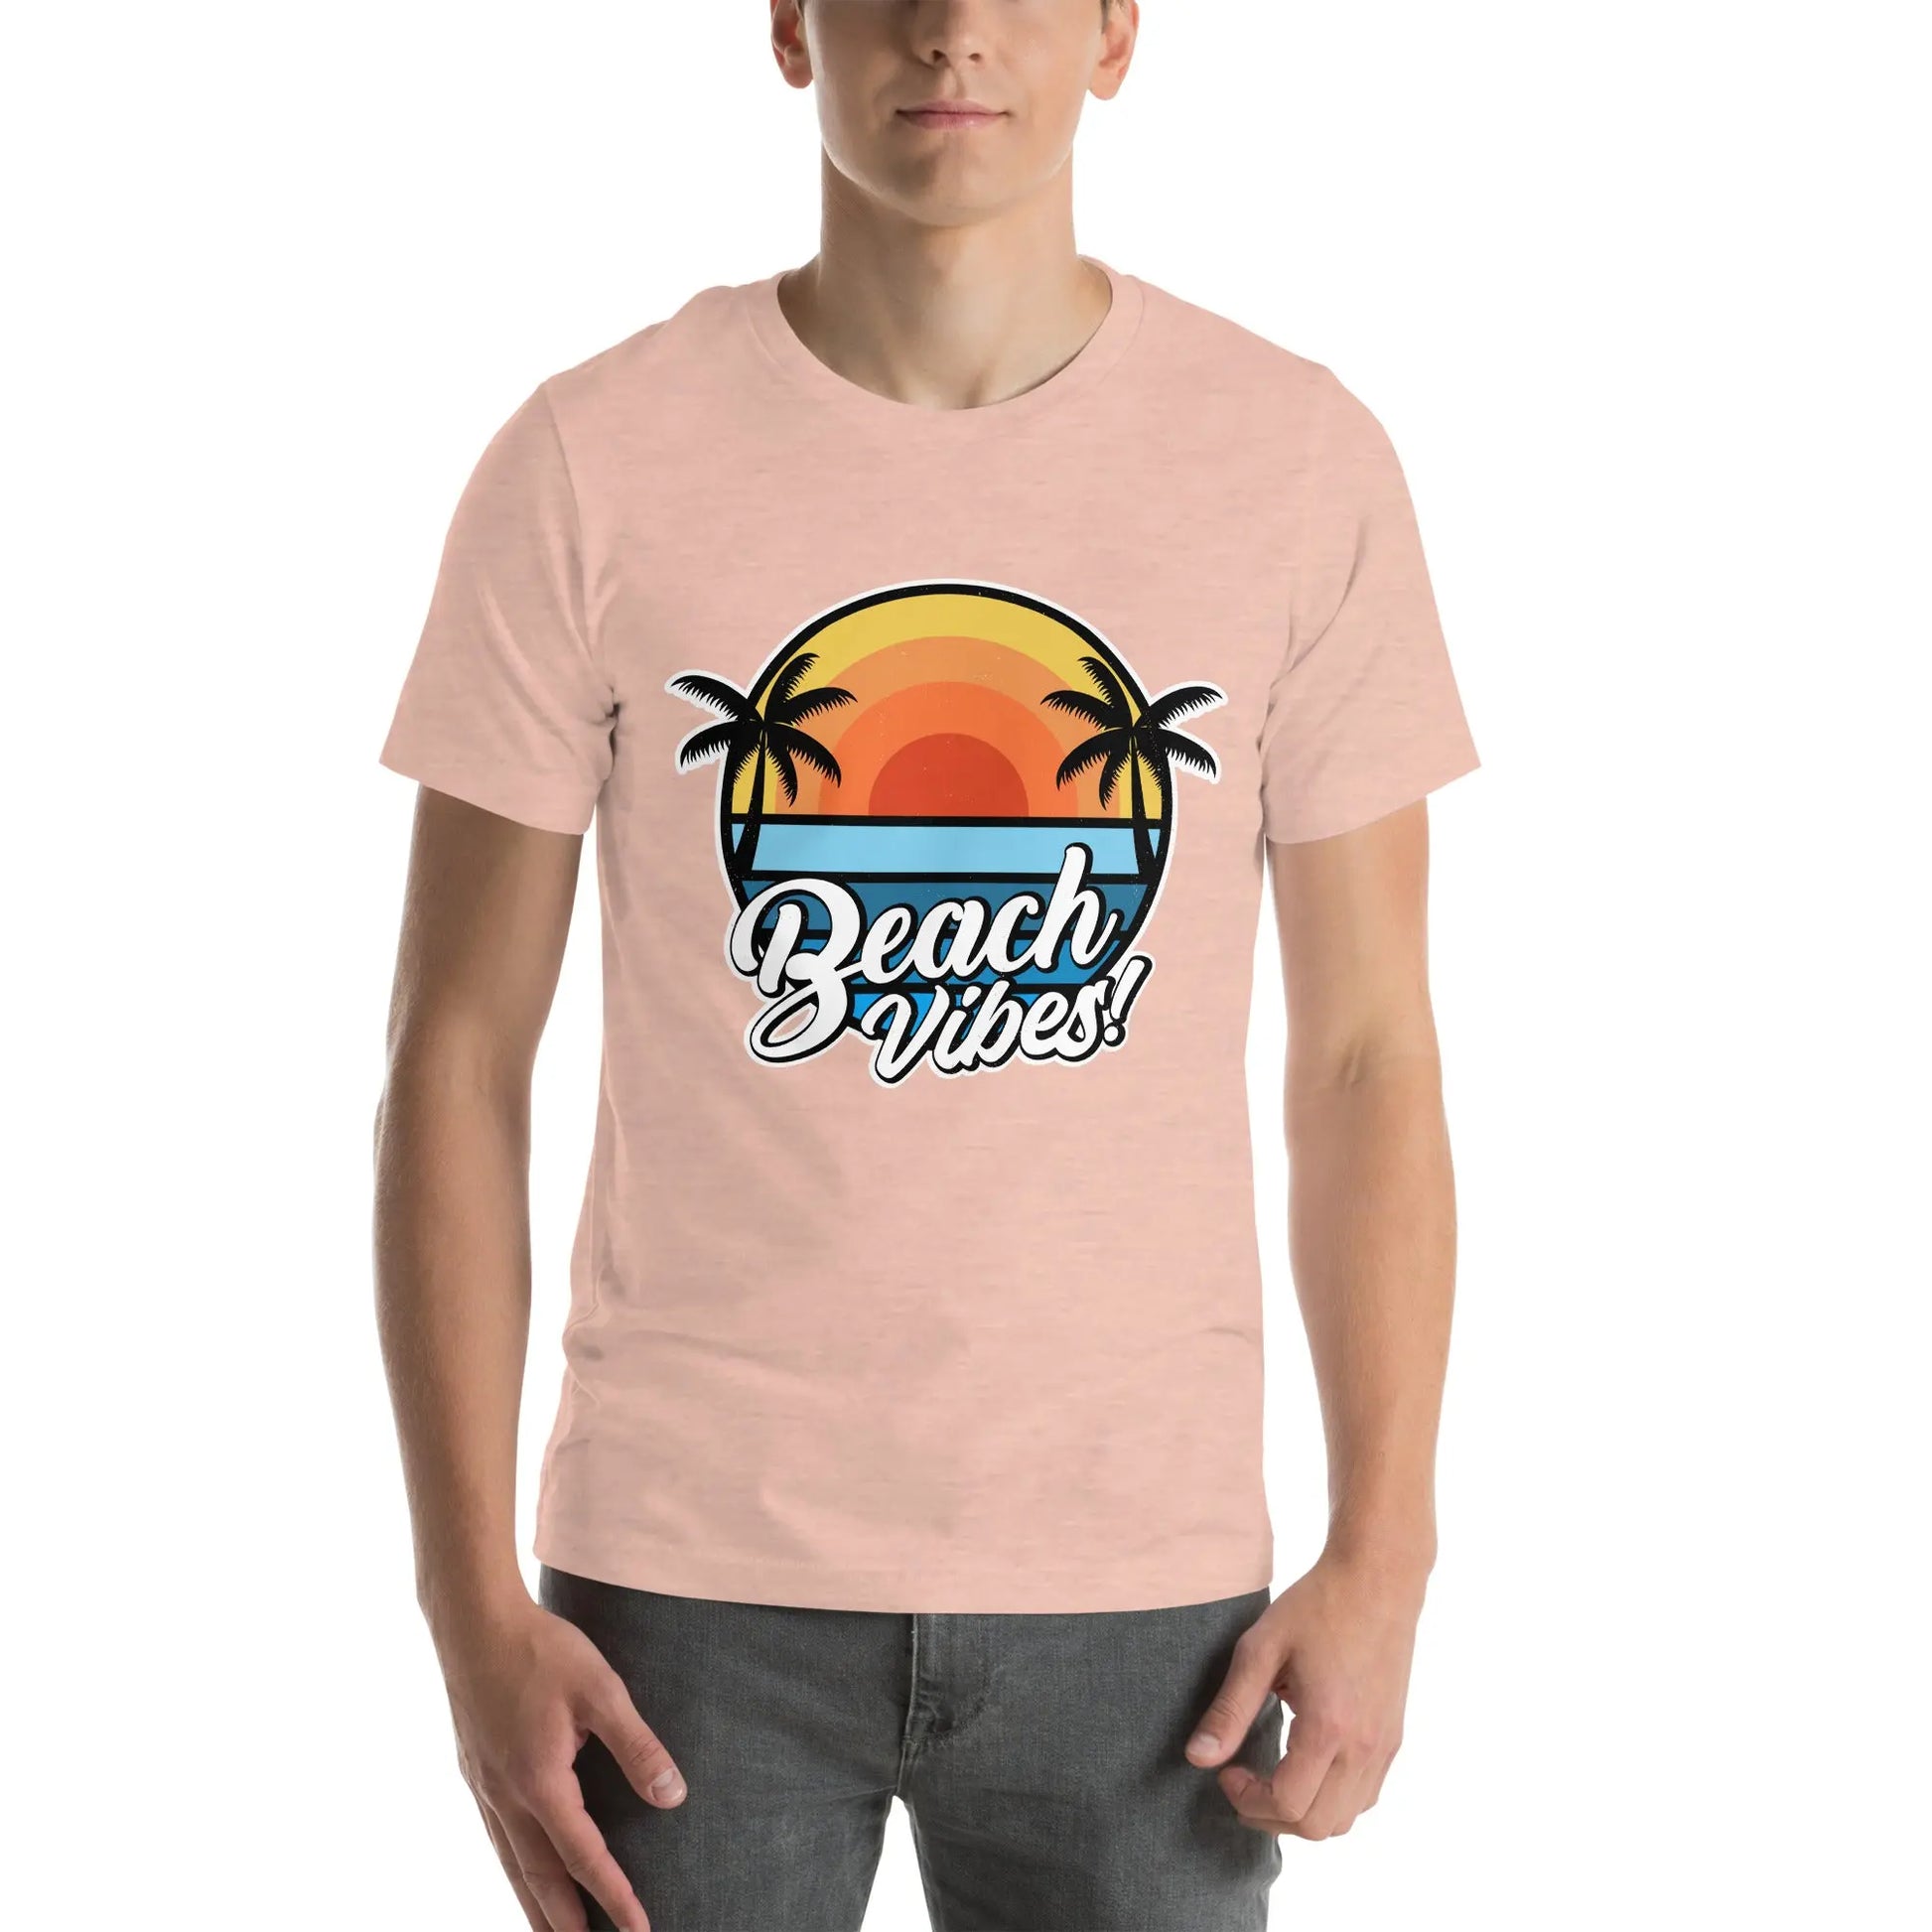 Beach Vibes with this Coastal Adult Unisex T-Shirt - Coastal Journeyz9496443_9367